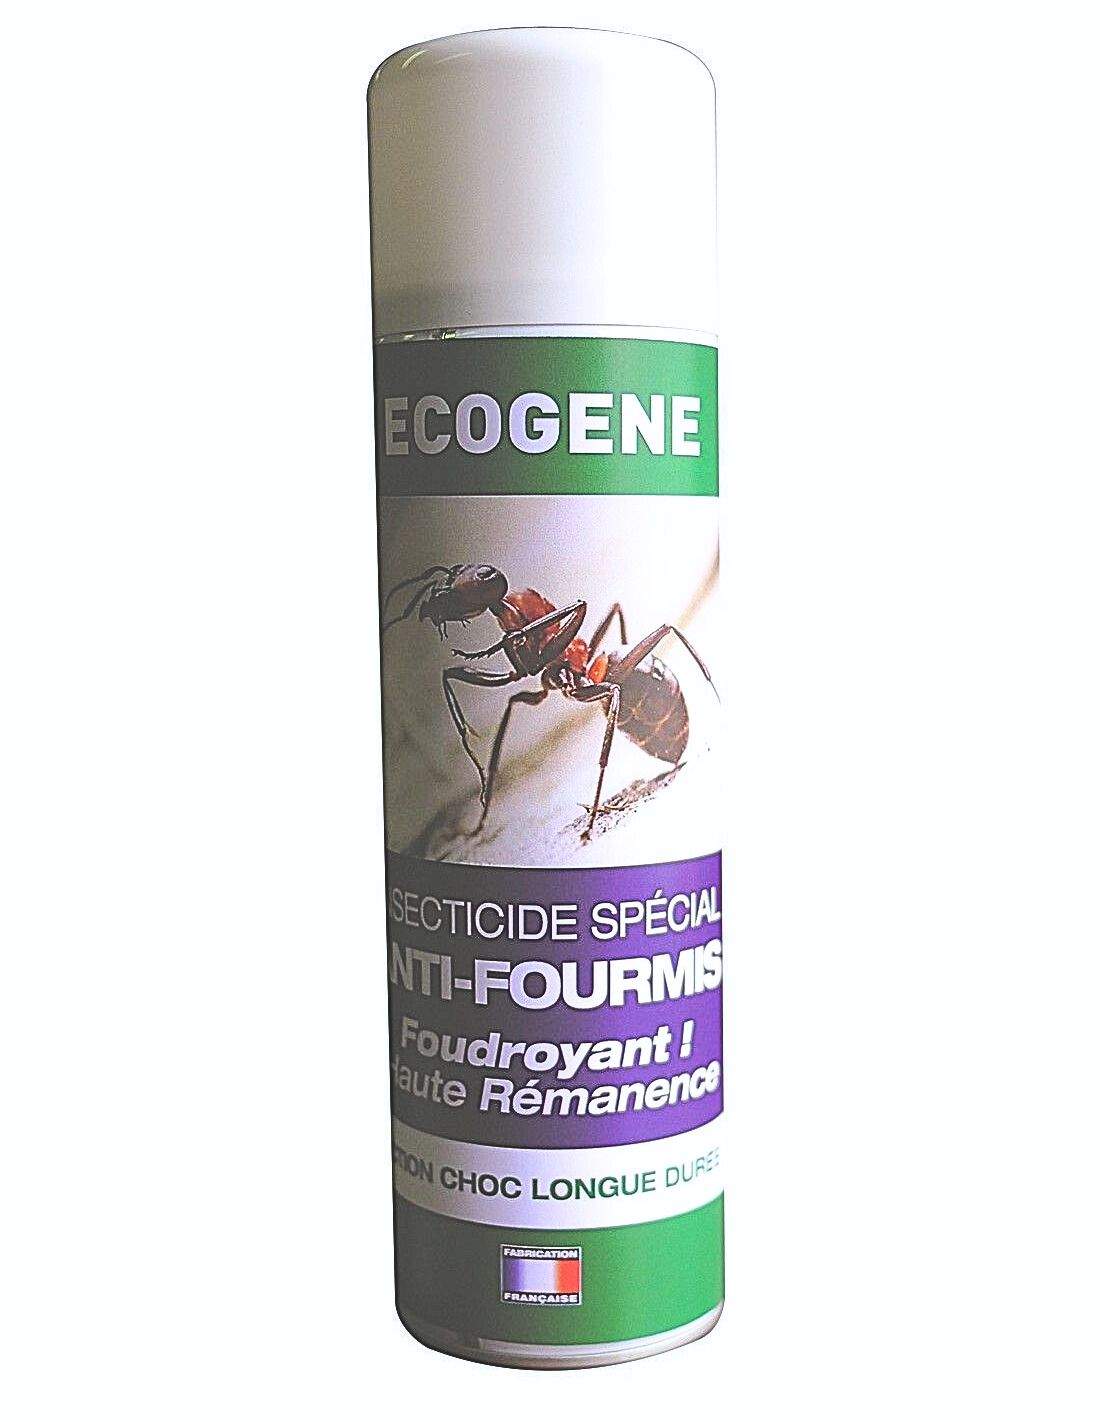 ECOGENE pro spray antihormigas 500ml.